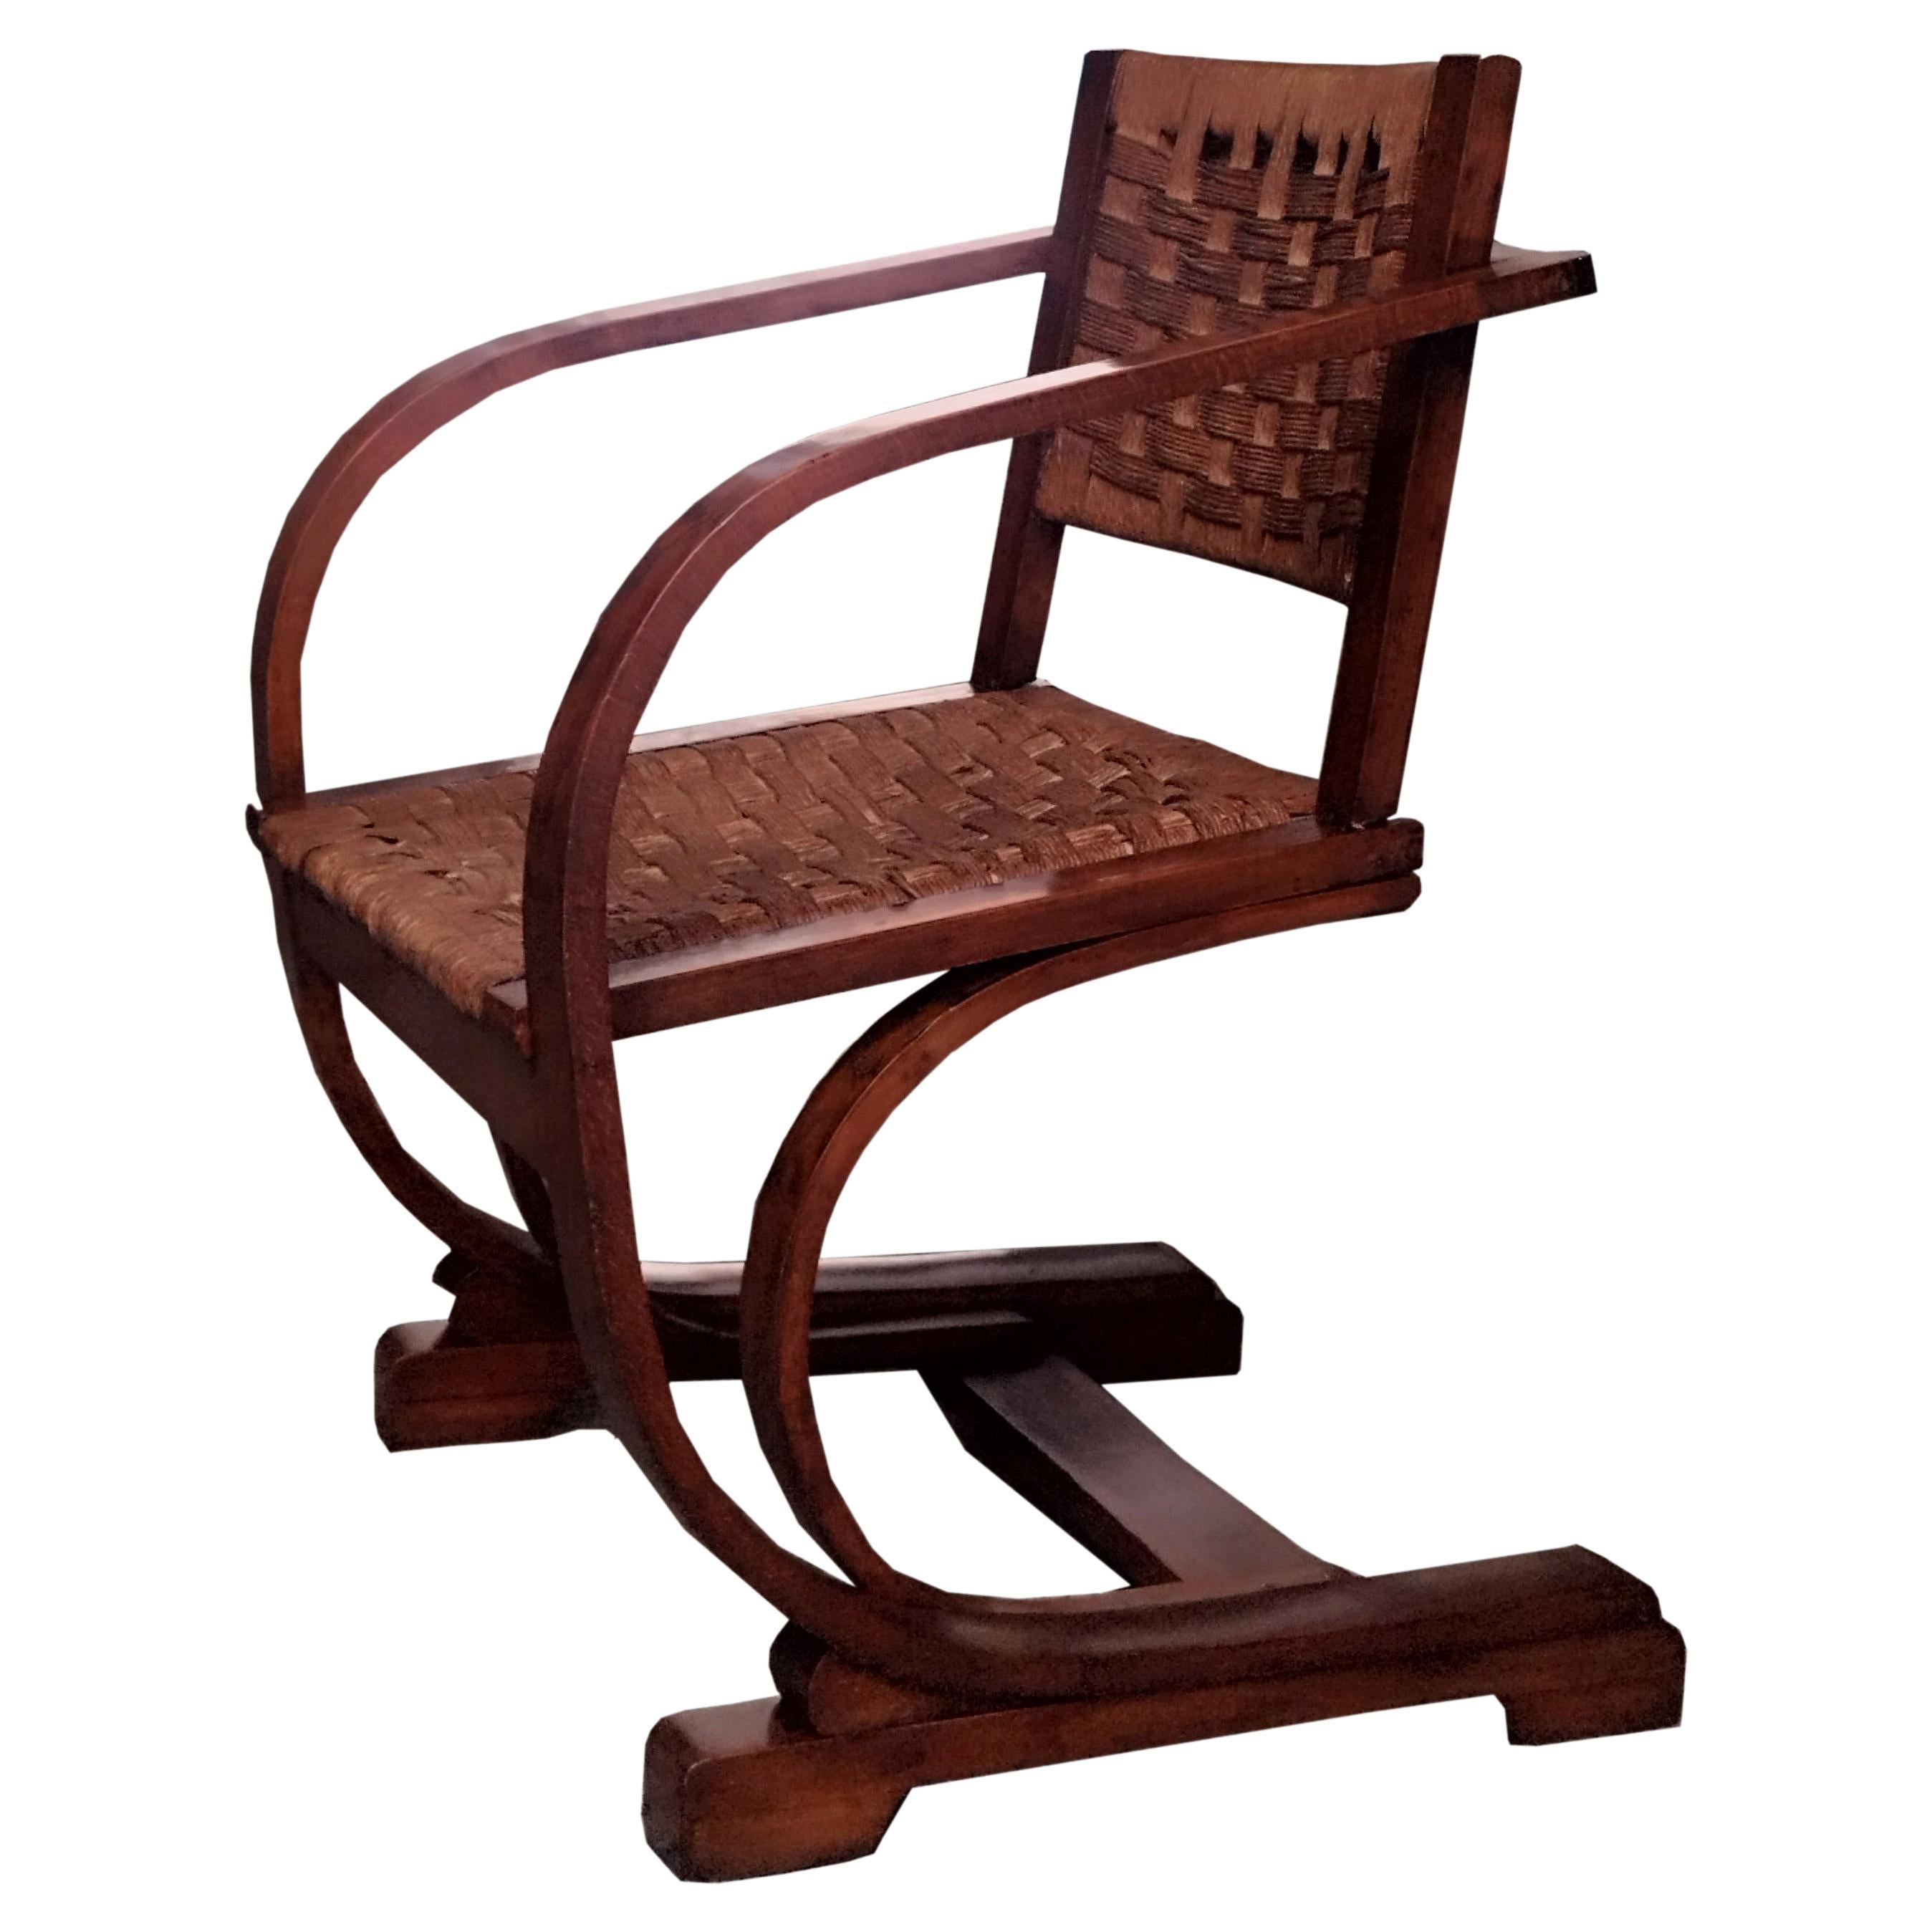 Bas Van Pelt Art Deco Bentwood Lounge Chair, Netherlands 1950s For Sale